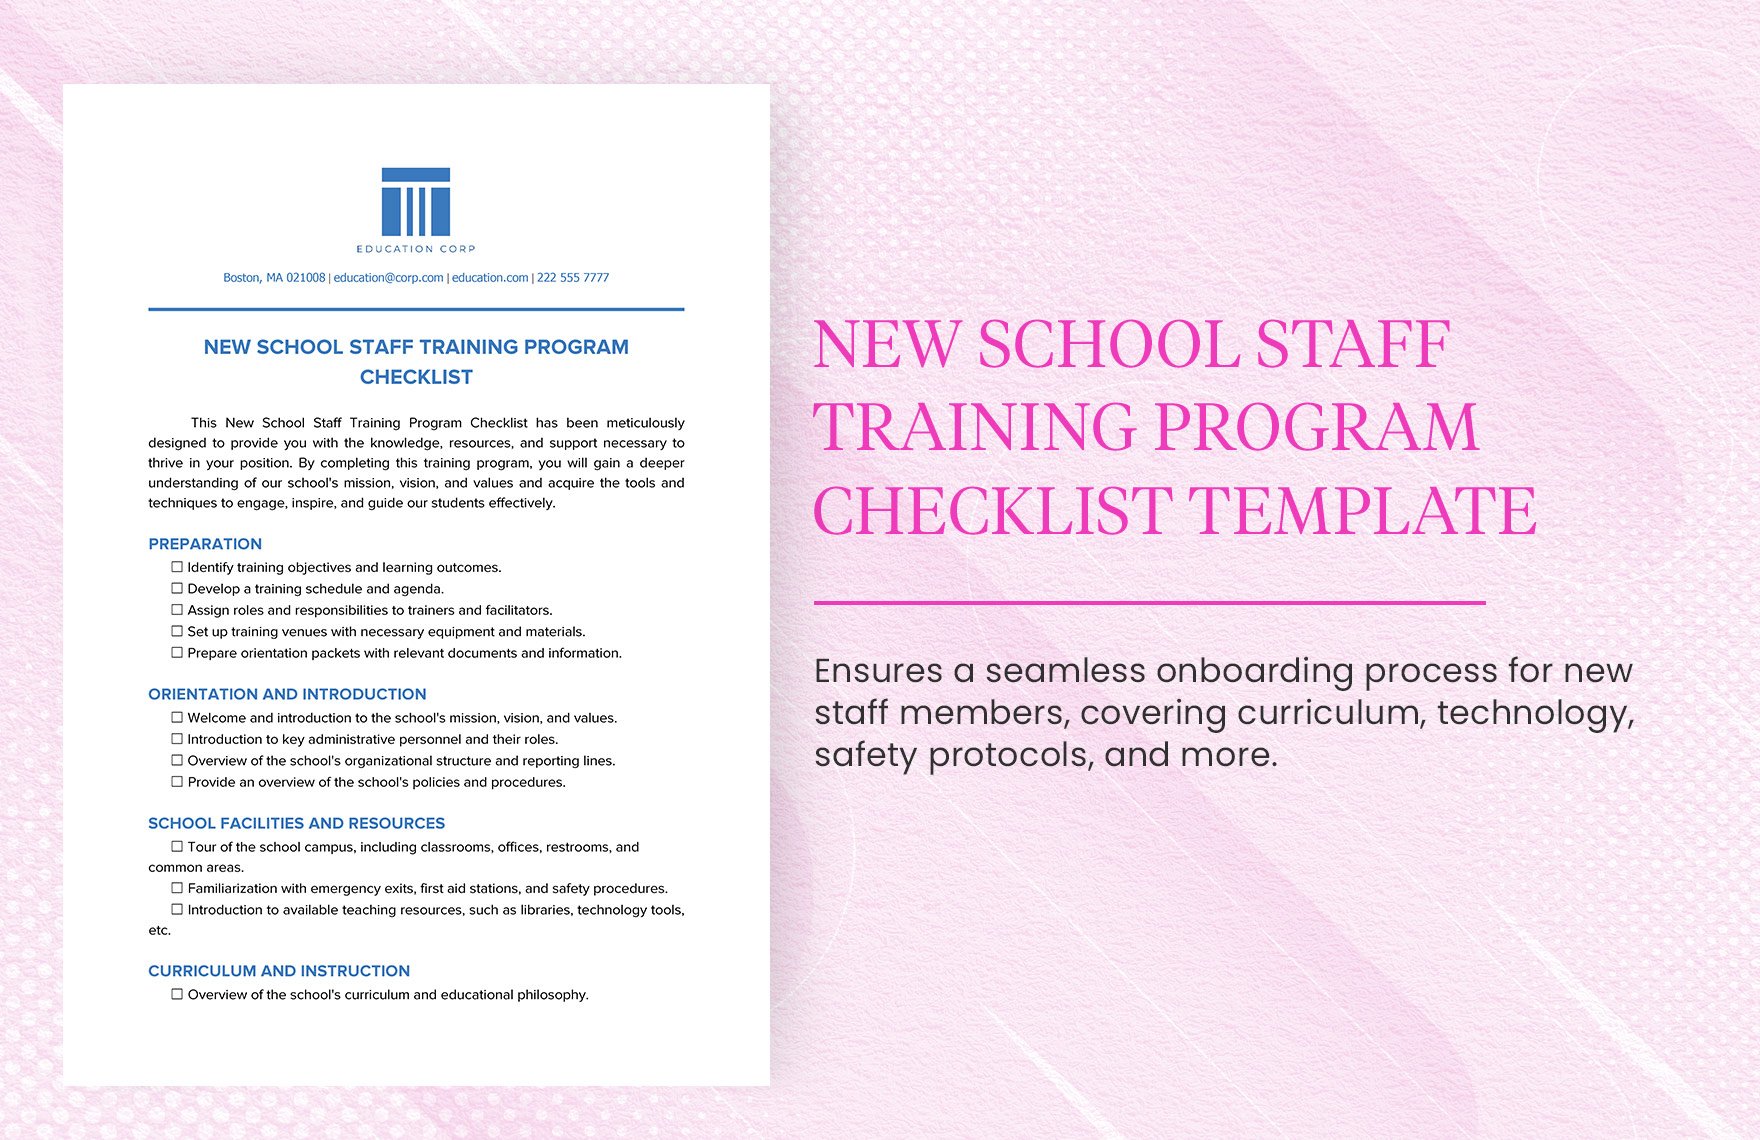 New School Staff Training Program Checklist Template